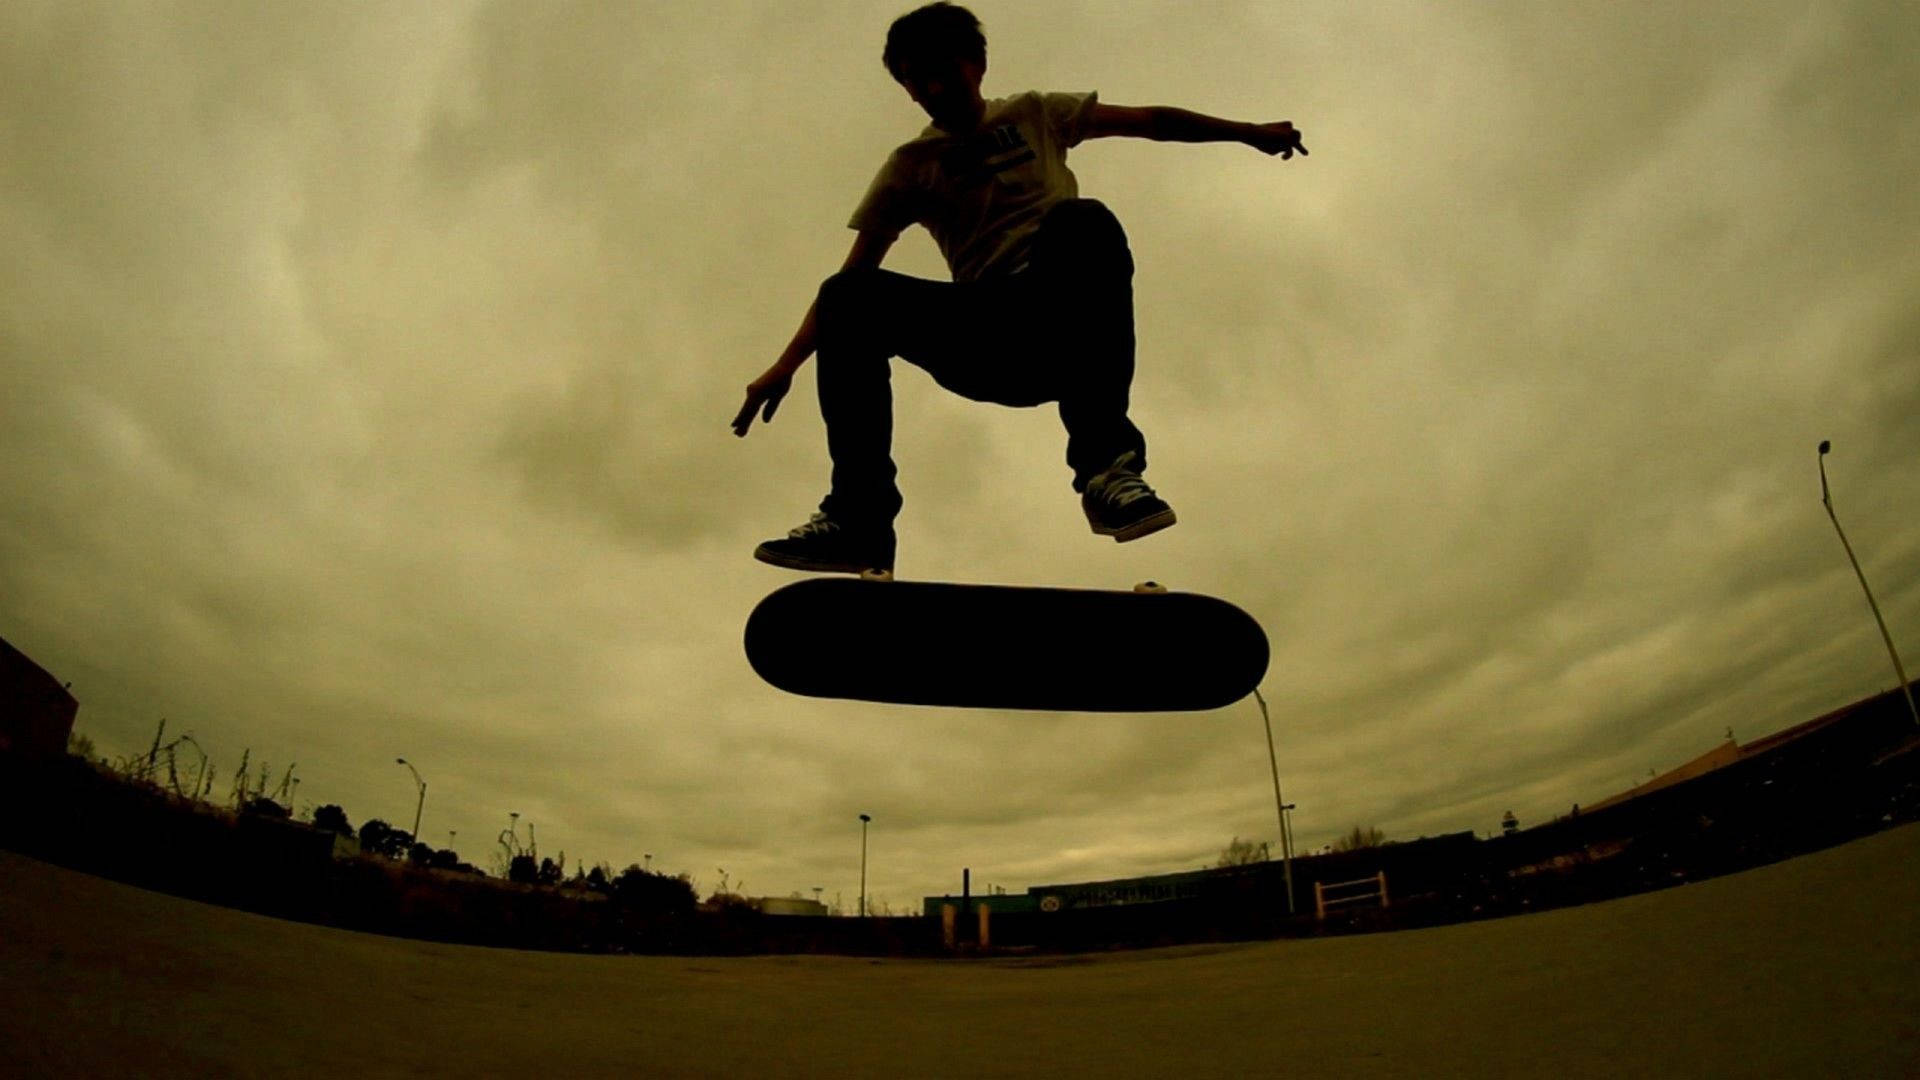 Skateboarder Takes A Big Jump Background